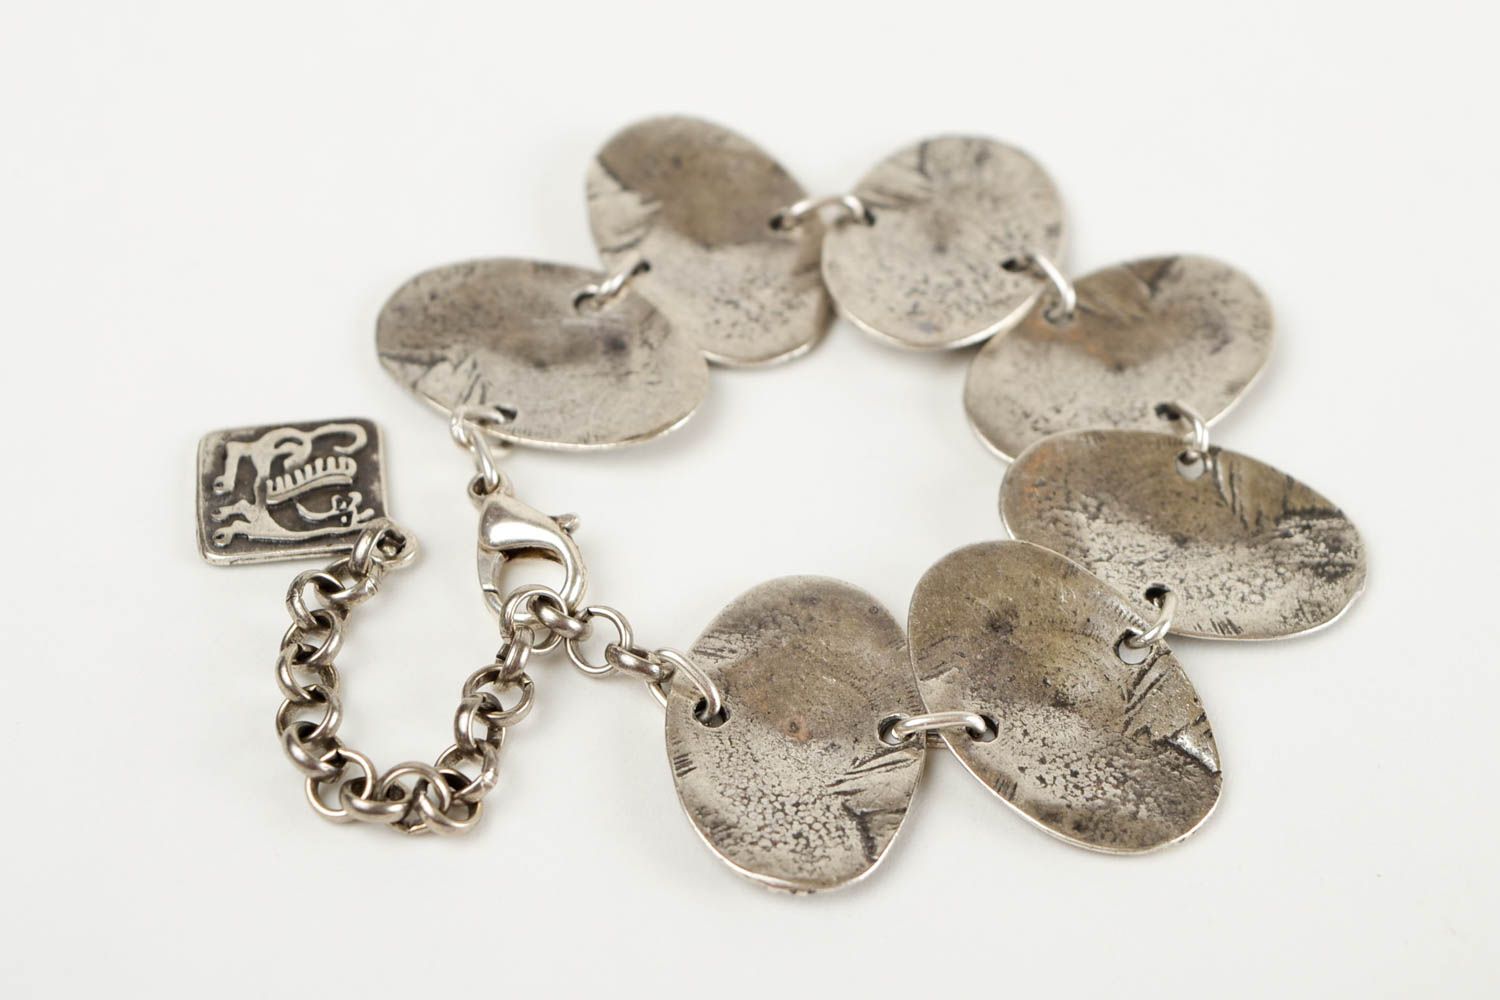 Unusual handmade wrist bracelet metal bracelet designs fashion tips gift ideas photo 5